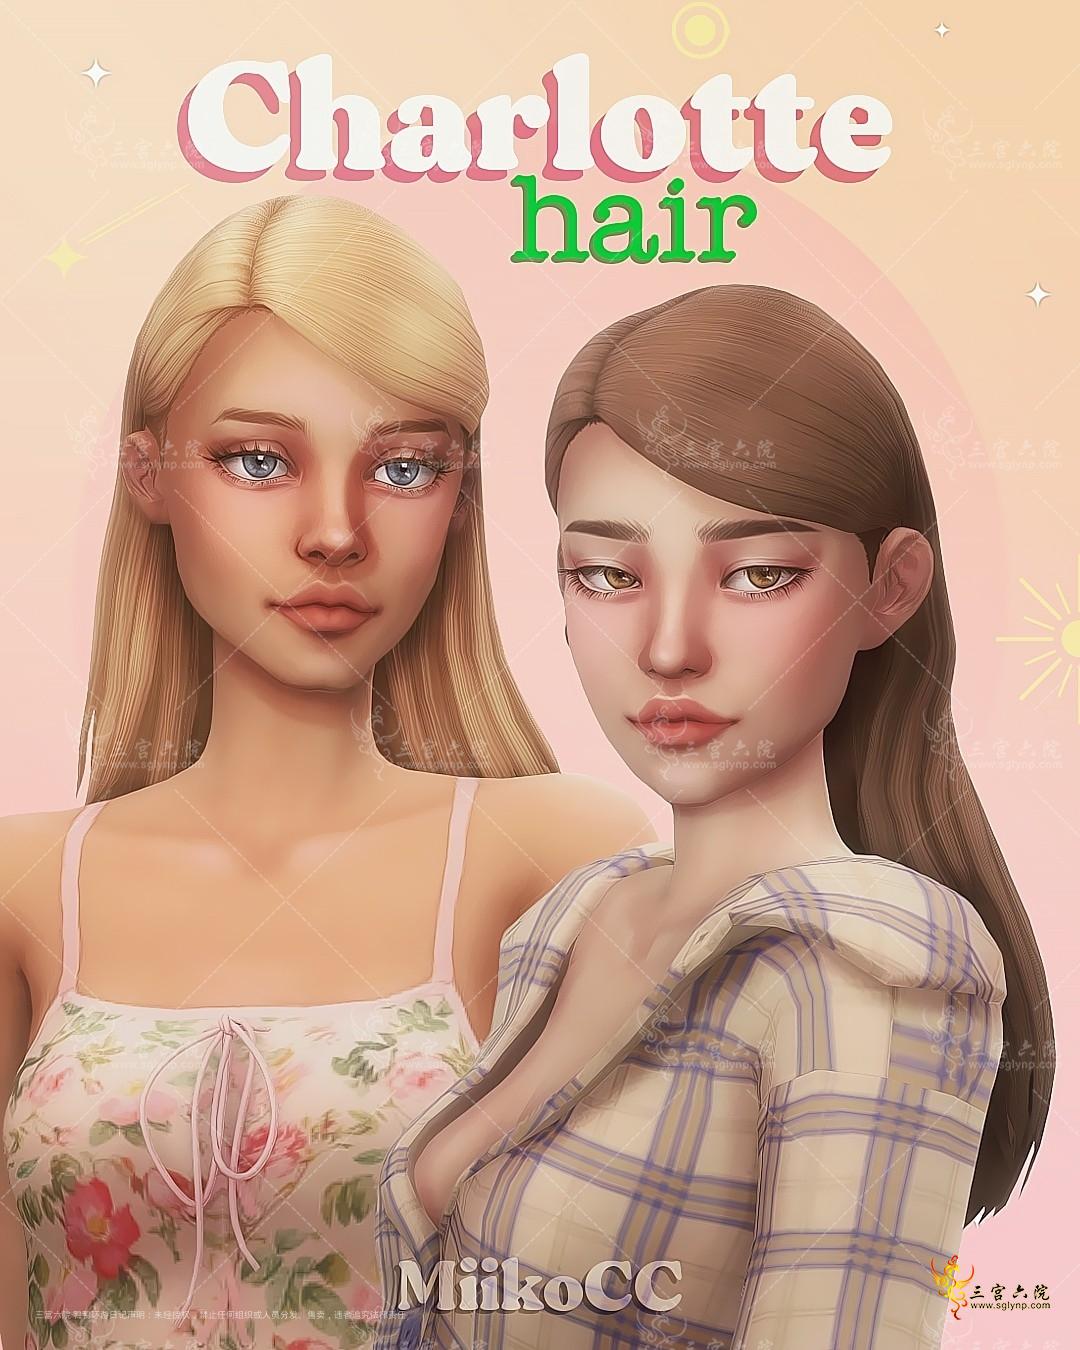 CHARLOTTE-HAIR - Copy.jpg